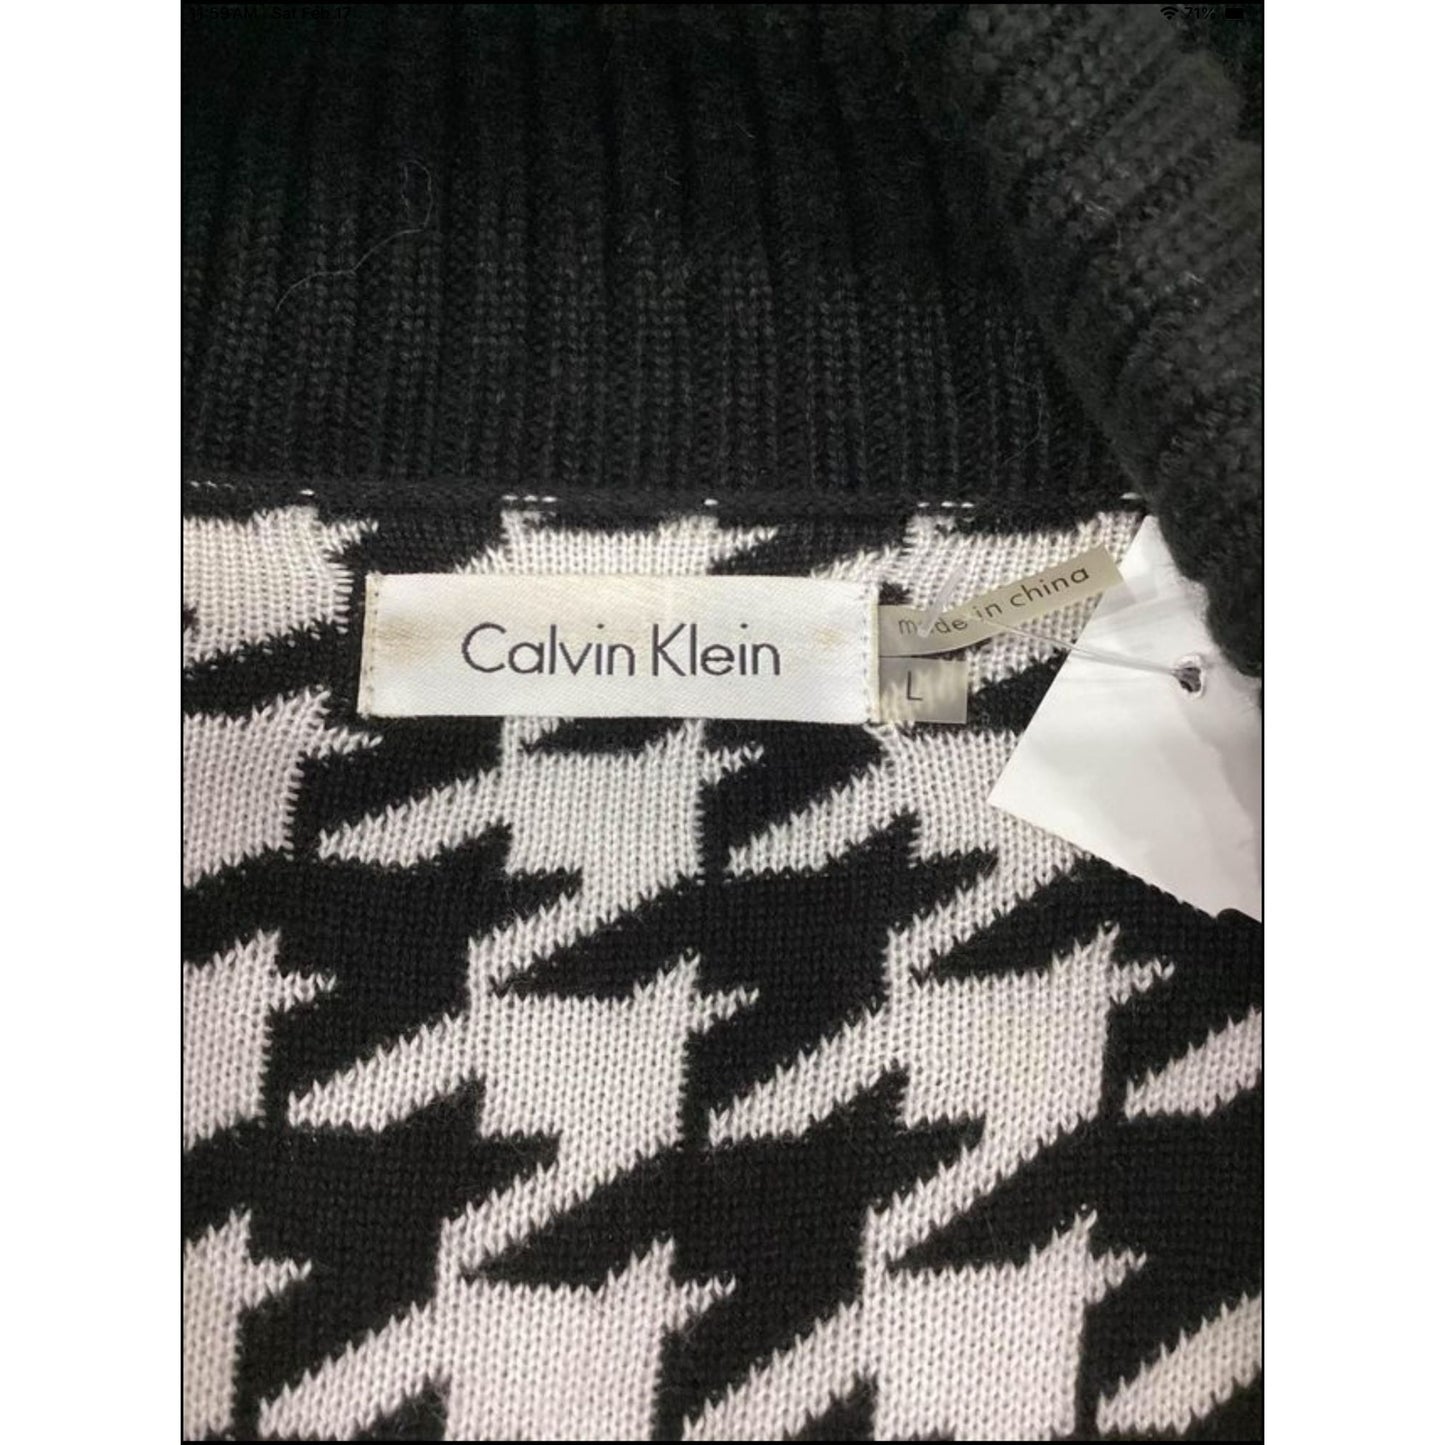 Women’s Casual Calvin Klein Dress